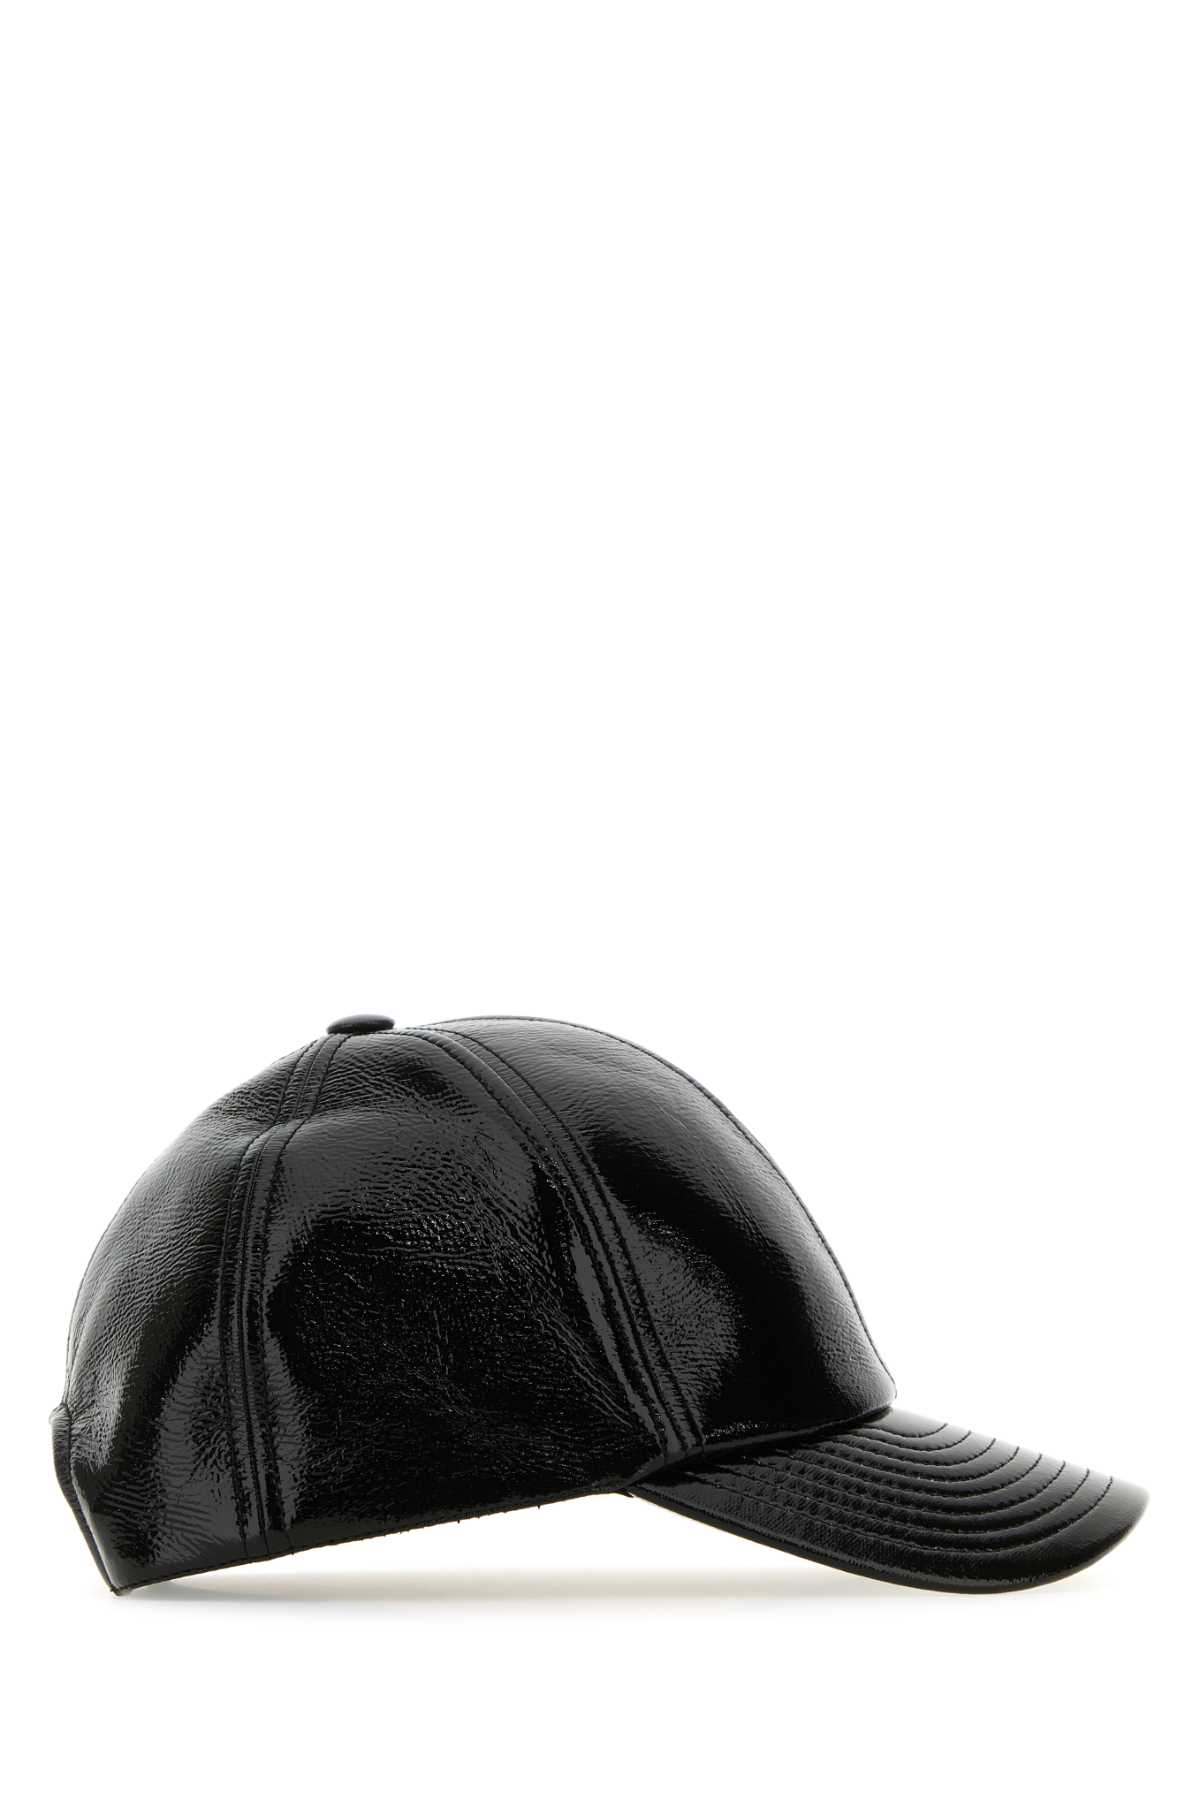 Courrèges Black Vinyl Reedition Baseball Cap